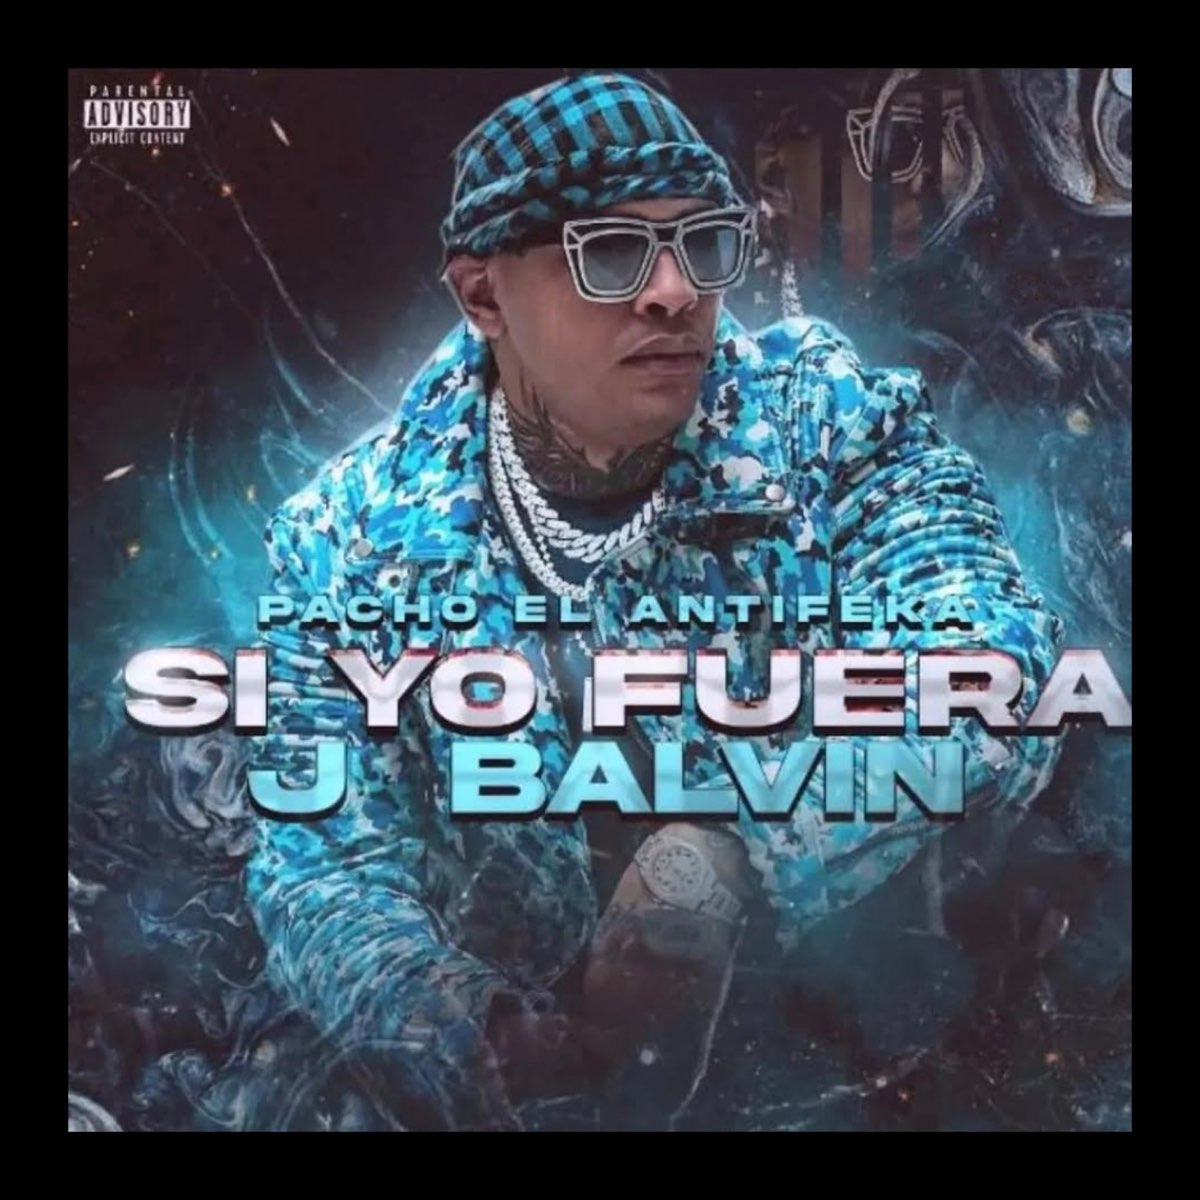 ‎Si Yo Fuera J Balvin - Single - Album by Pacho El Antifeka - Apple Music